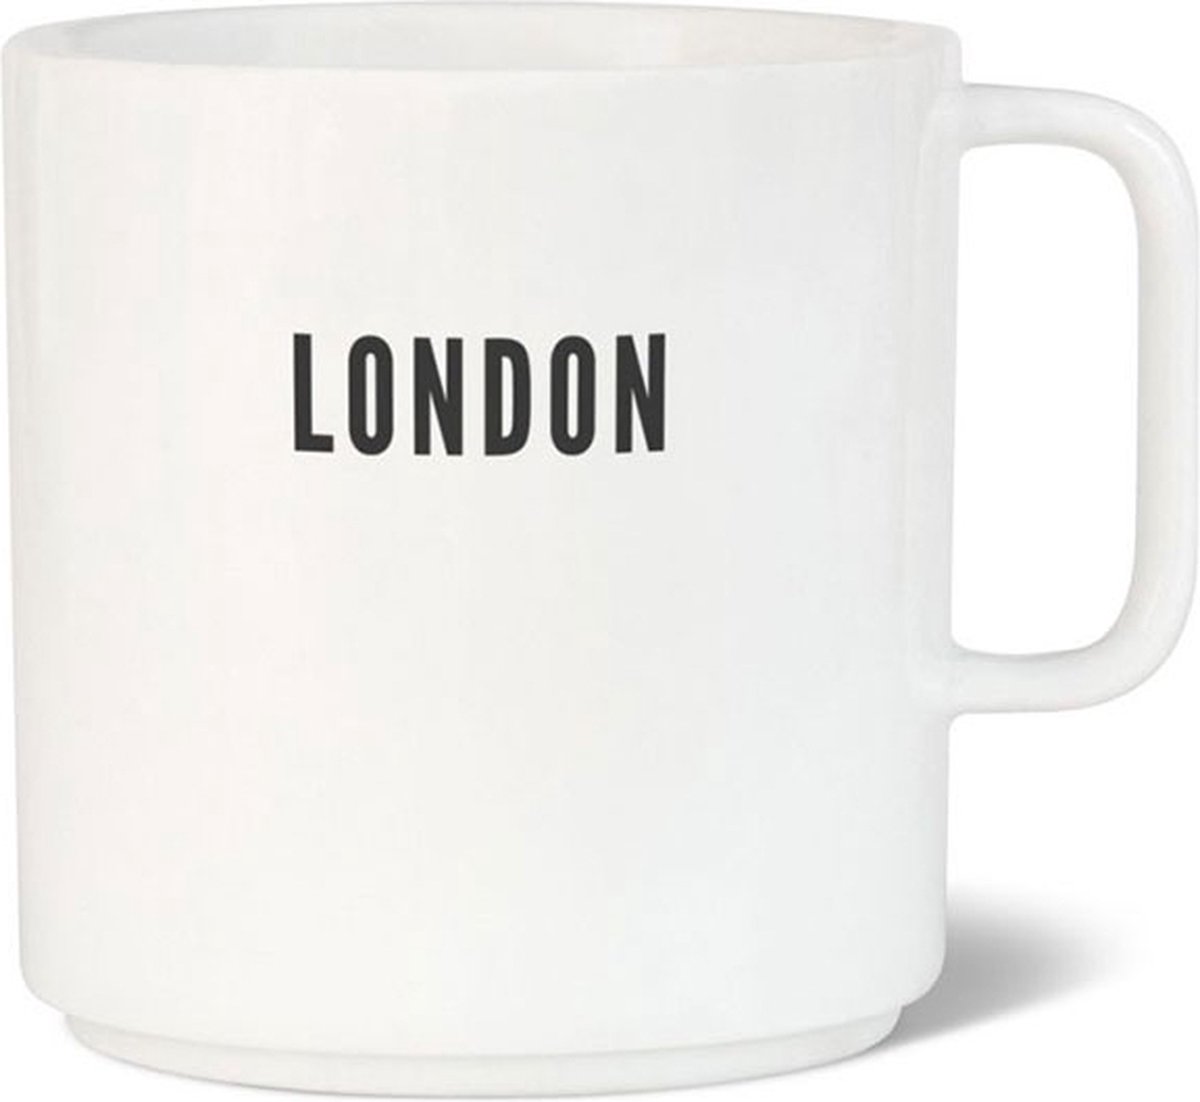 London City Coffee mug